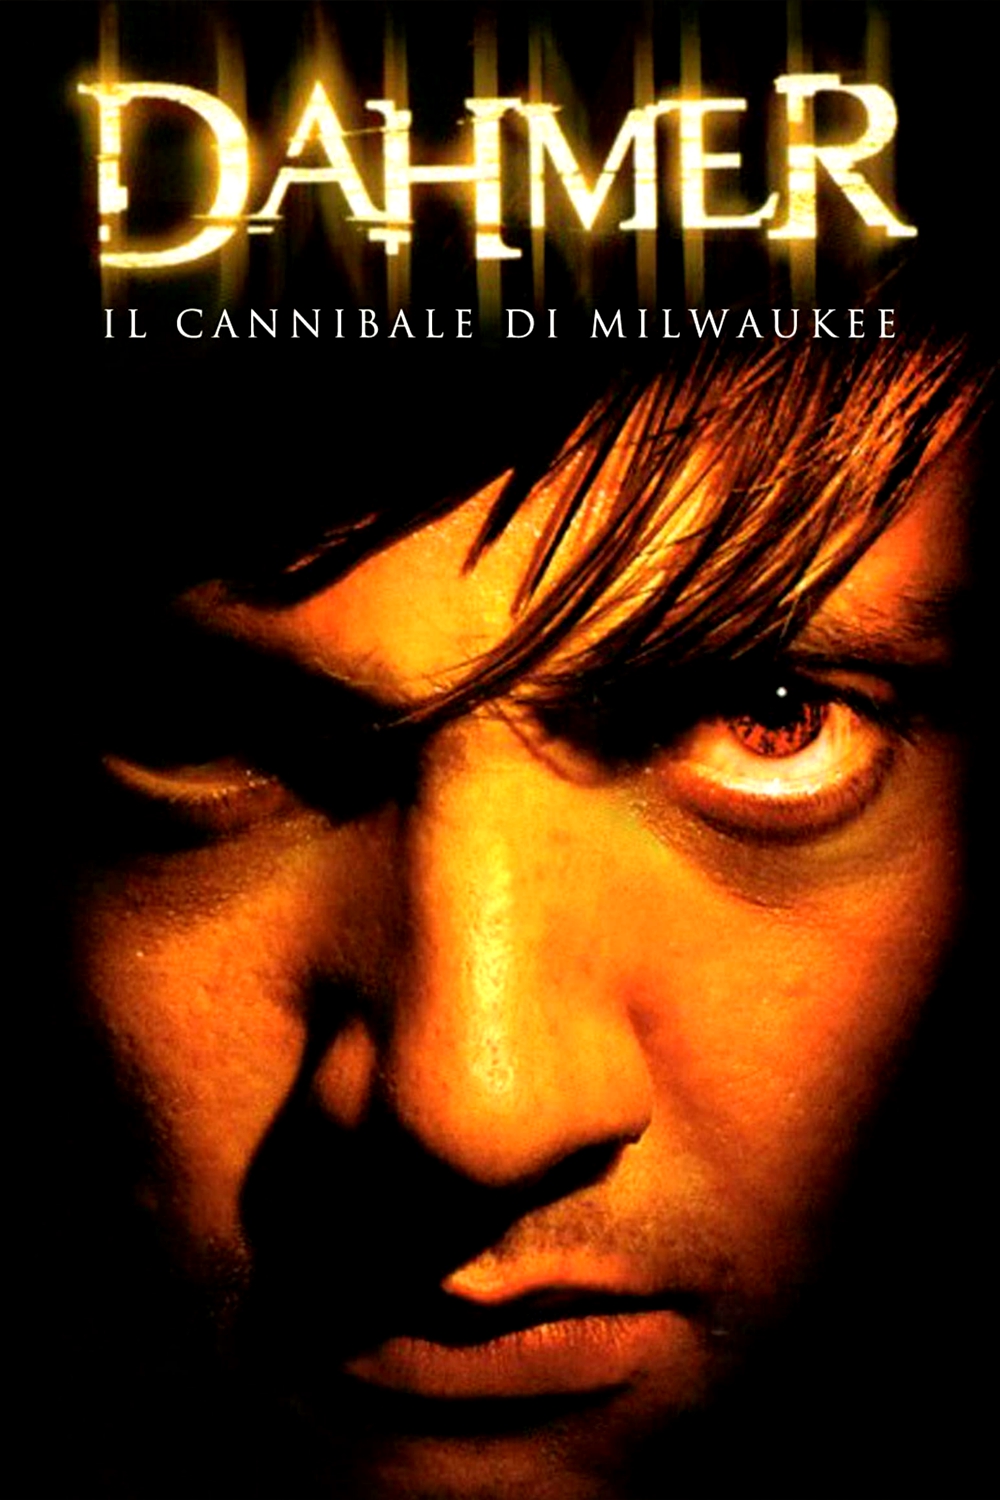 Dahmer – Il cannibale di Milwaukee [HD] (2002)